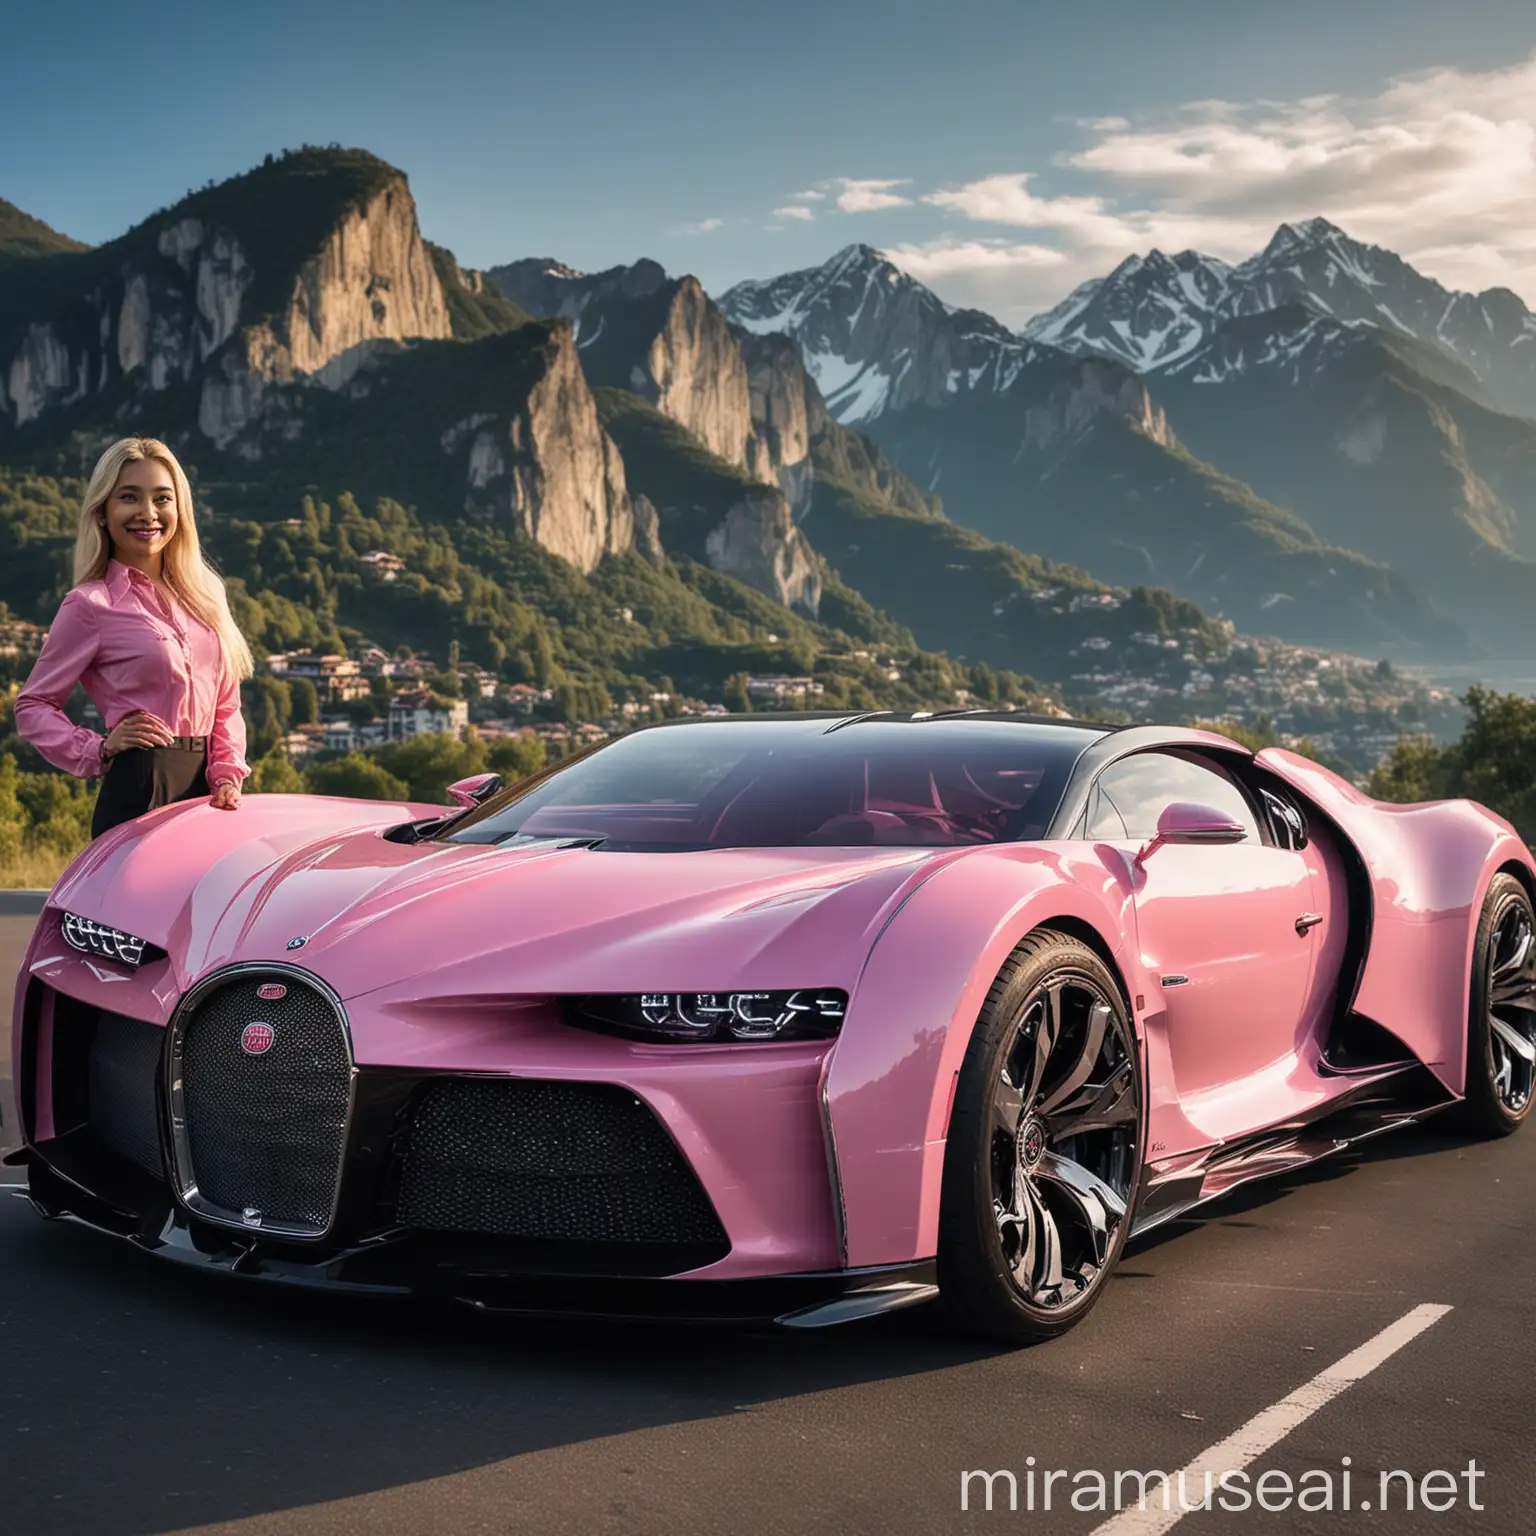 Blonde Woman with Pink Bugatti La Voiture Noire Smiling near Mountain Scenery